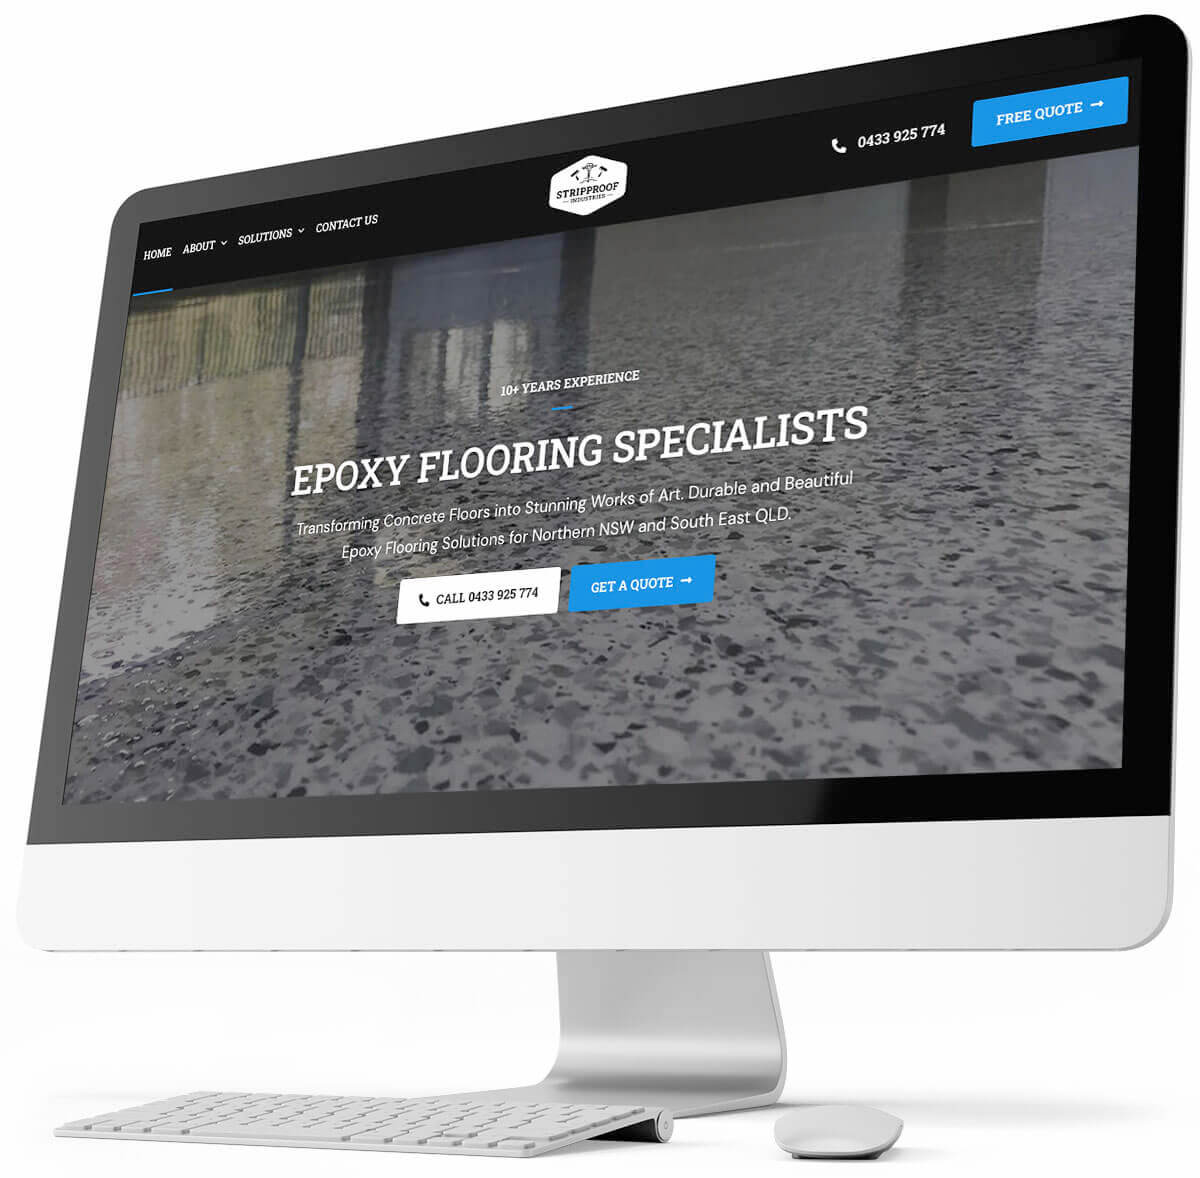 Stripproof Industries Website Design - Robert Mullineux Freelance Web Developer Australia 2023